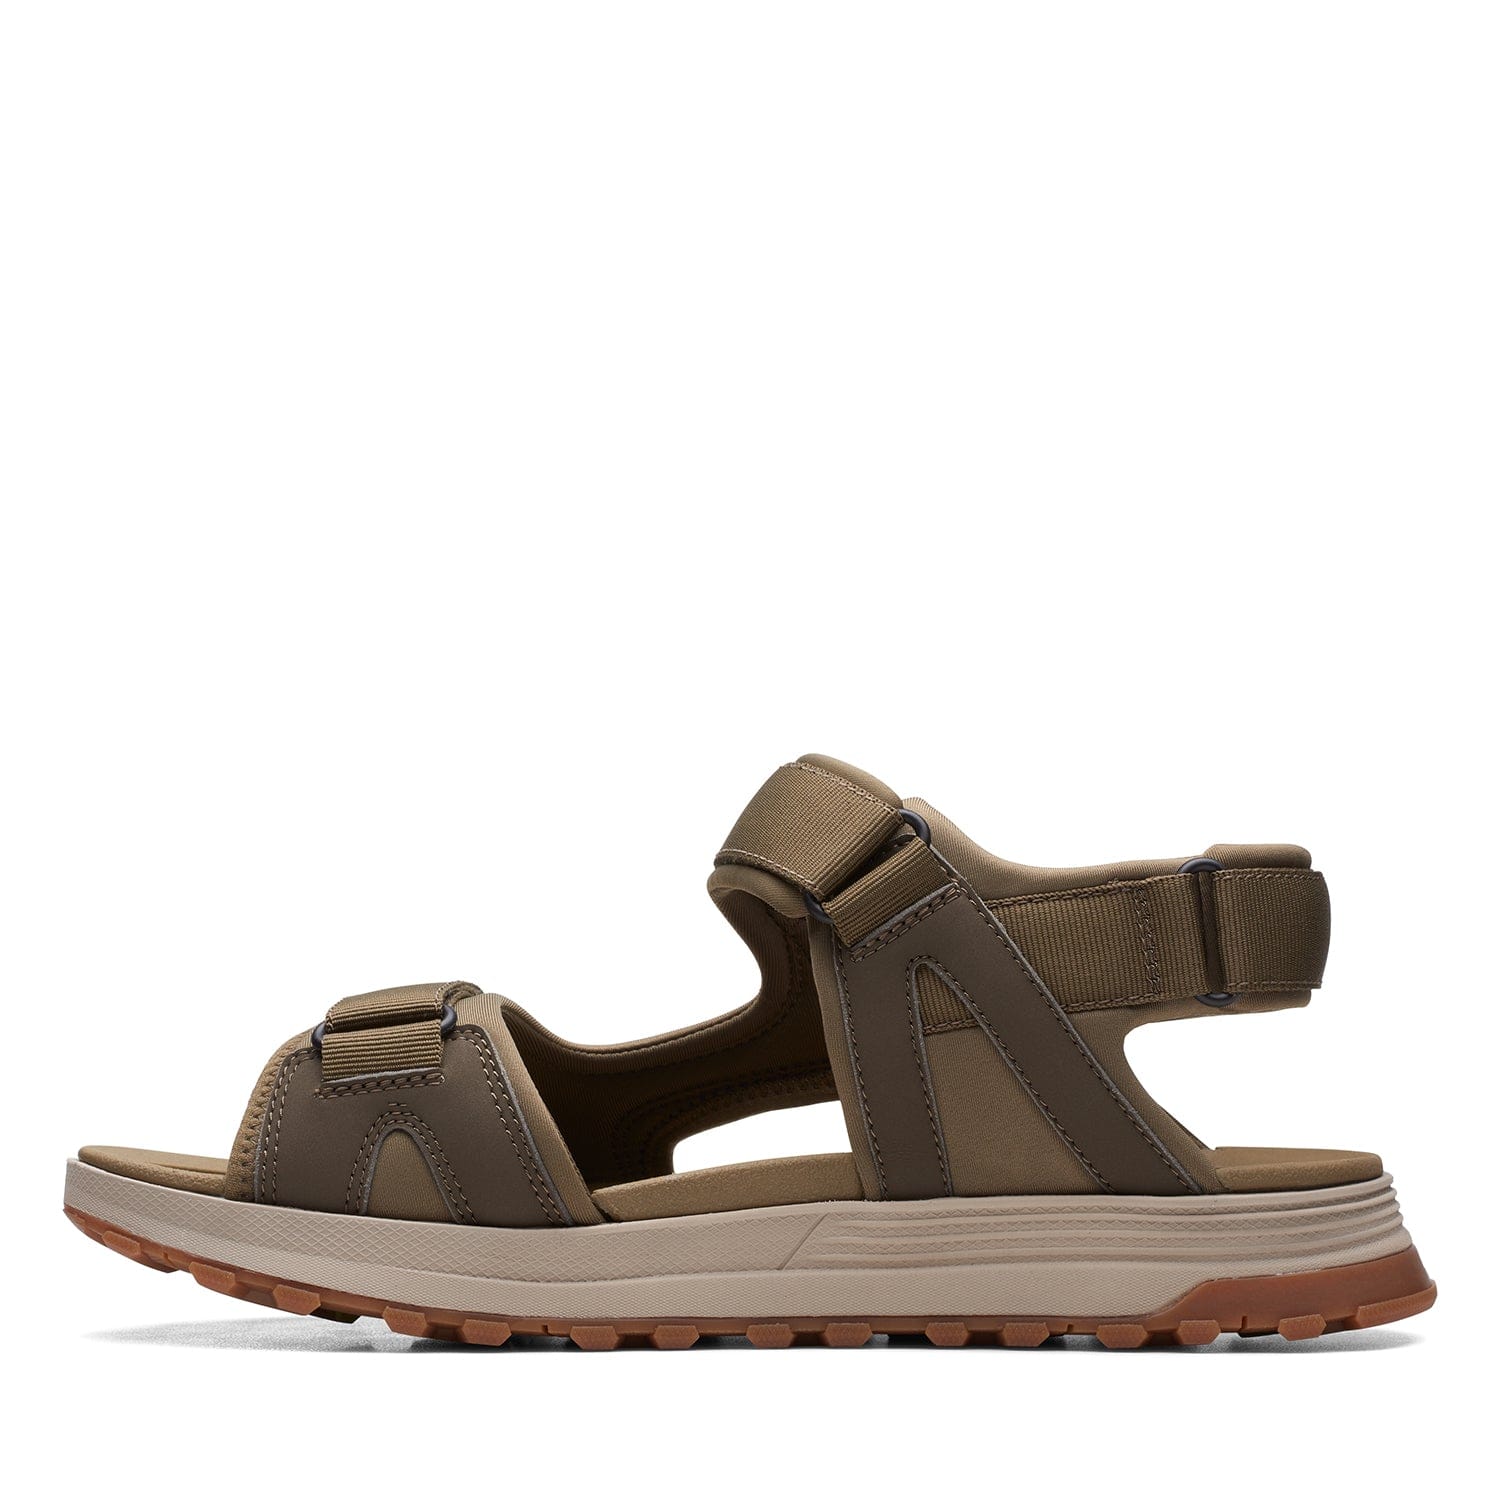 Clarks Atl Trek Sun - Sandals - Olive Combi - 261703227 - G Width (Standard Fit)